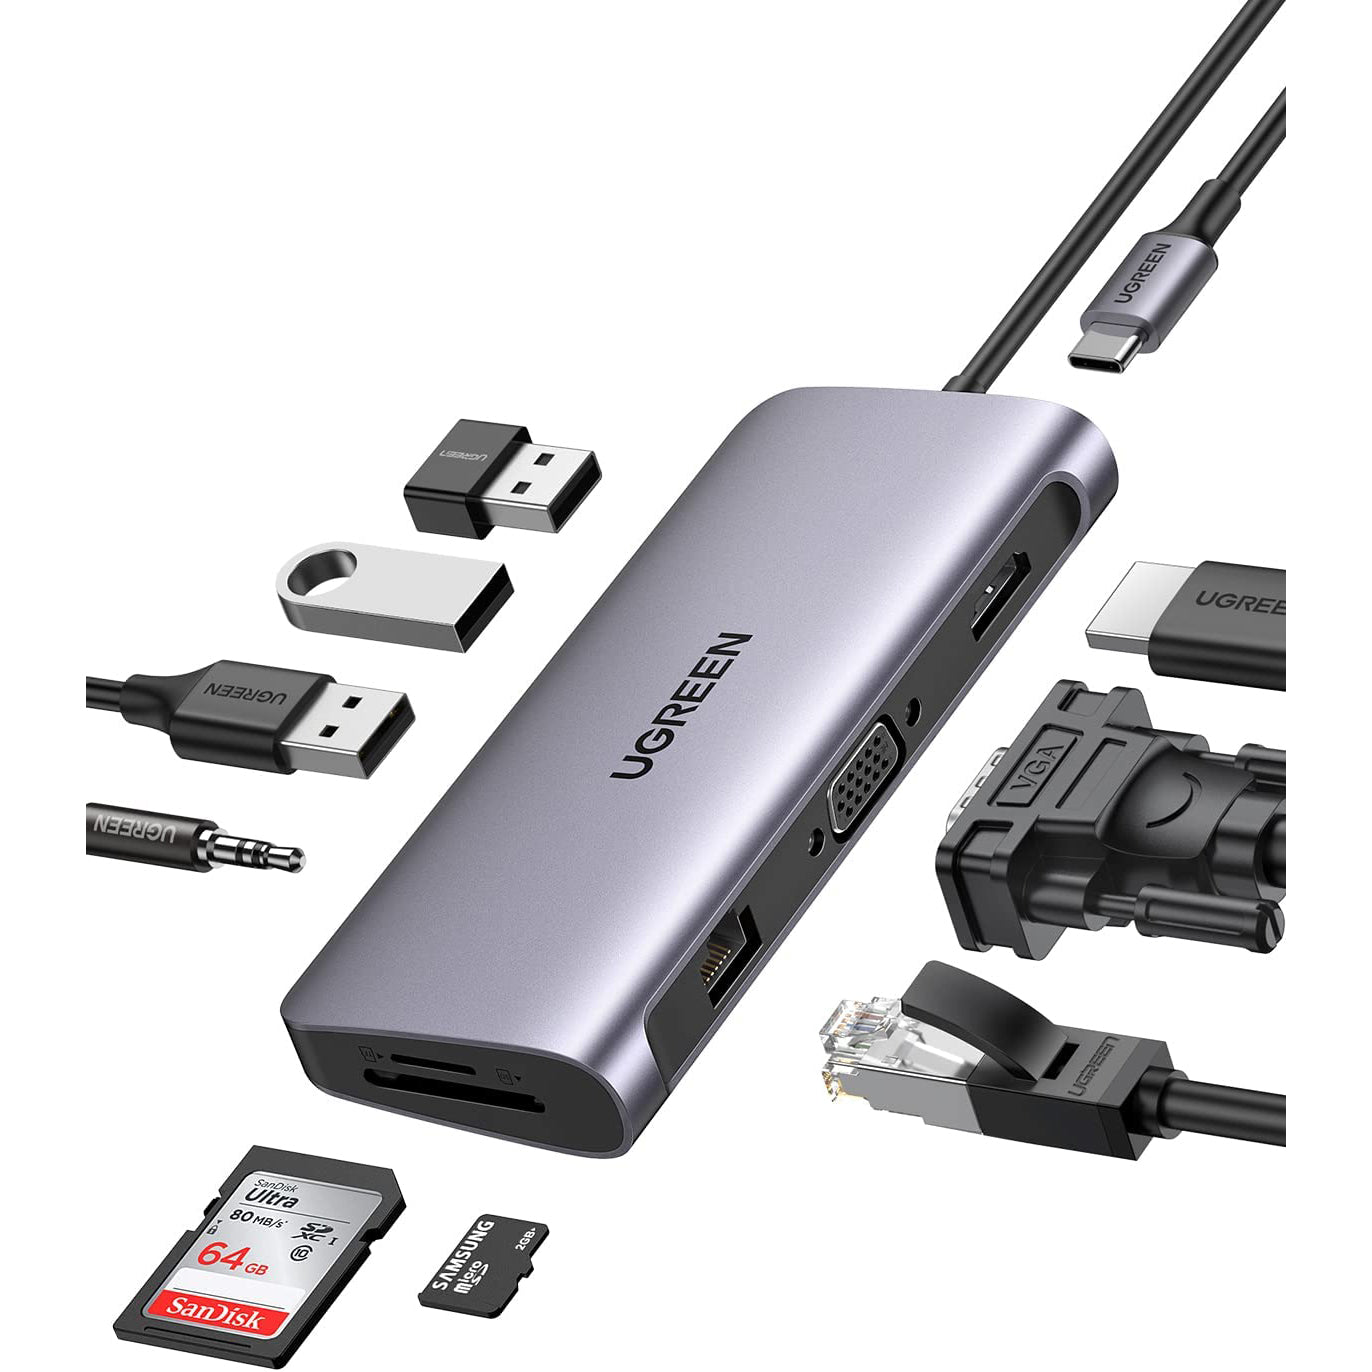 Ugreen USB C 10 in 1 Silver – 80133 Price in Pakistan